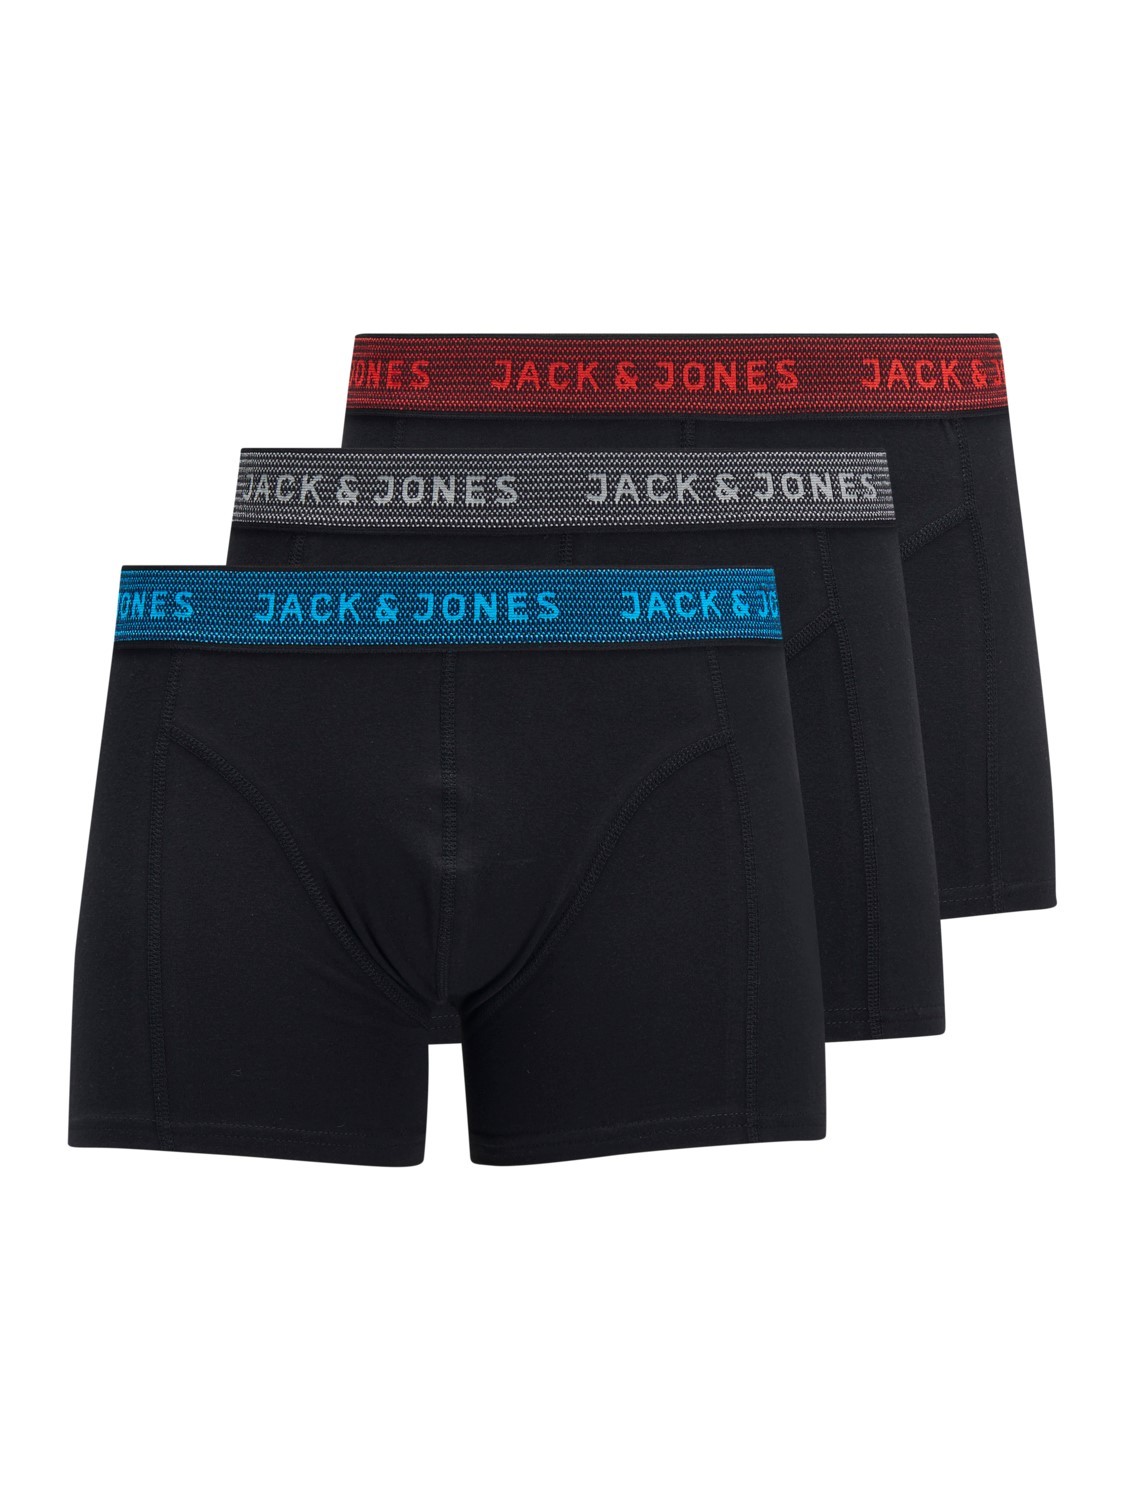 jacwaistband trunks 3 pack jack jones